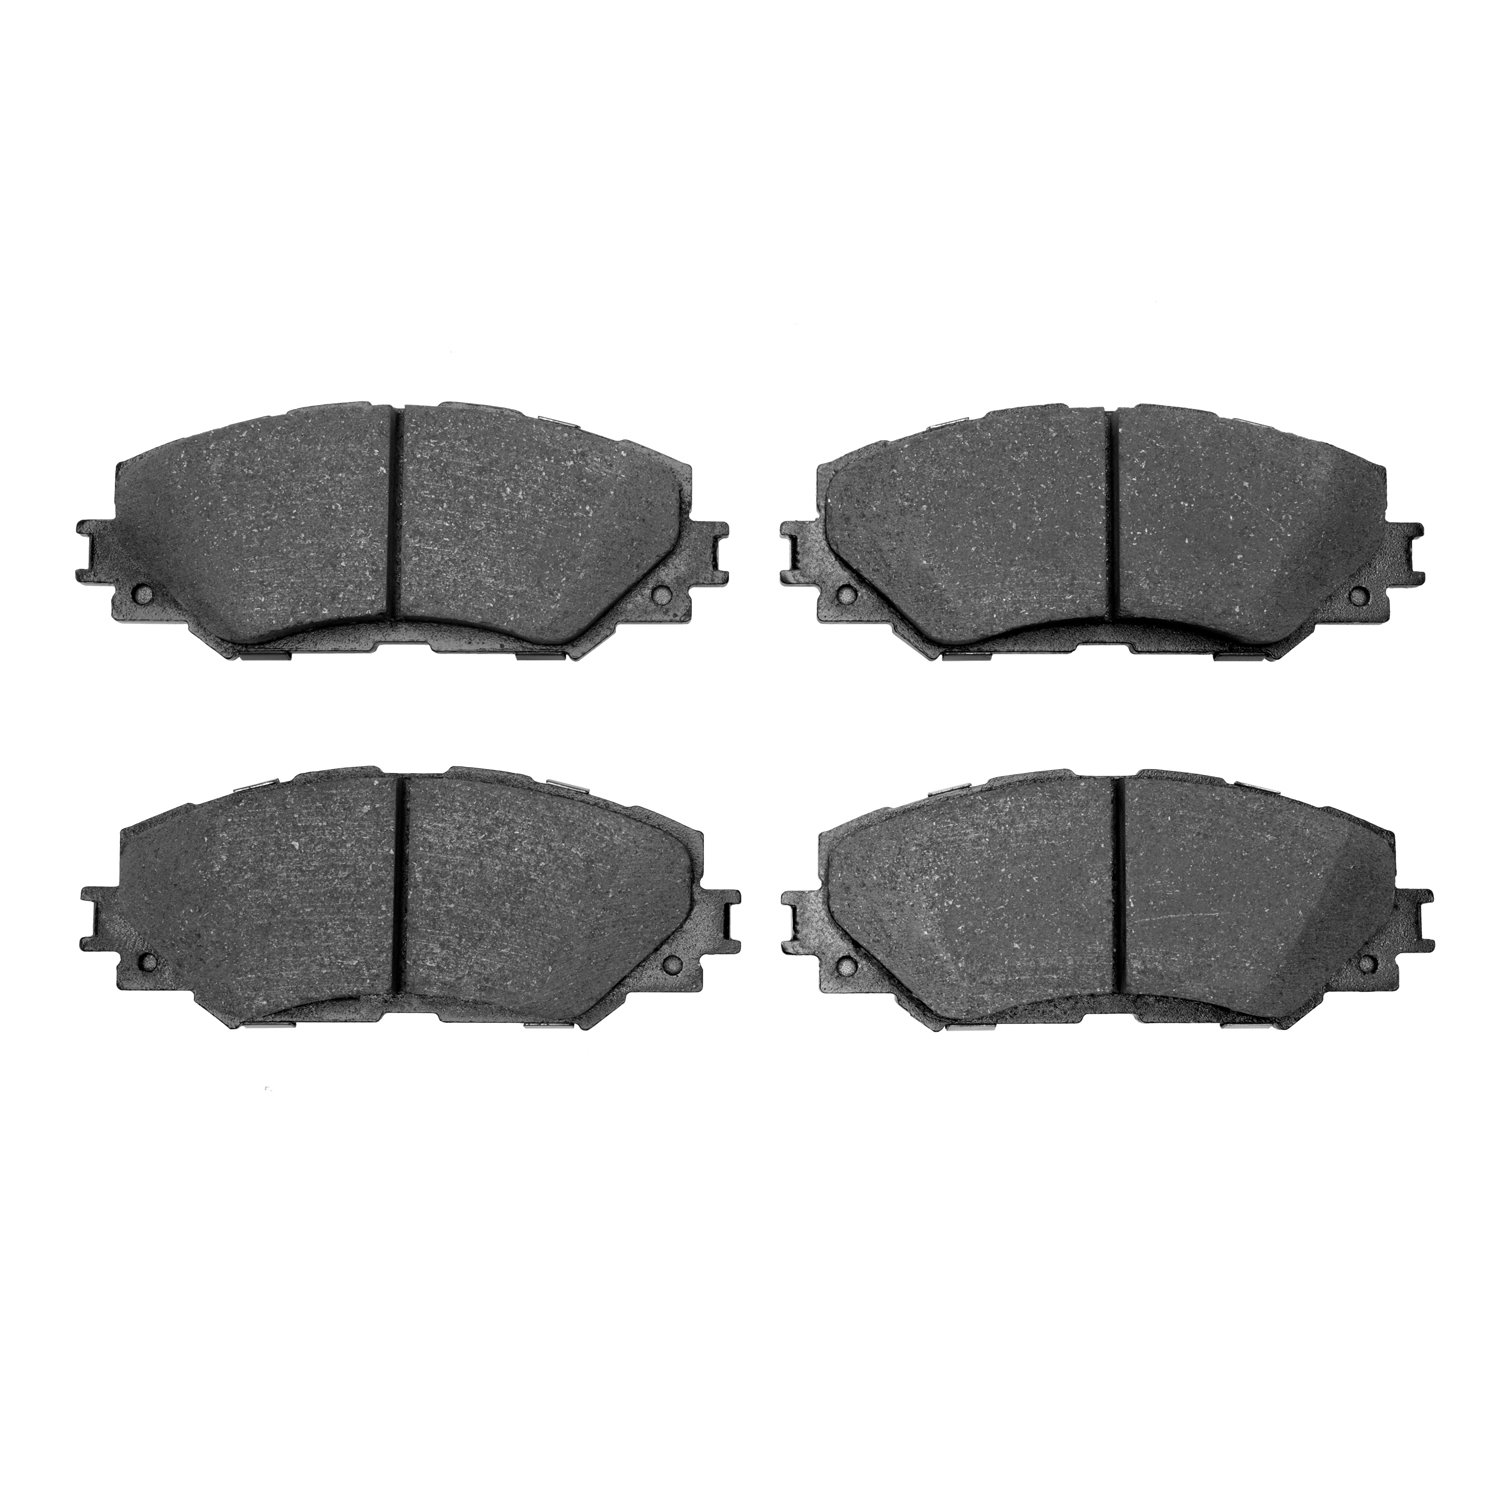 1000-1210-00 Track/Street Low-Metallic Brake Pads Kit, 2006-2019 Multiple Makes/Models, Position: Front